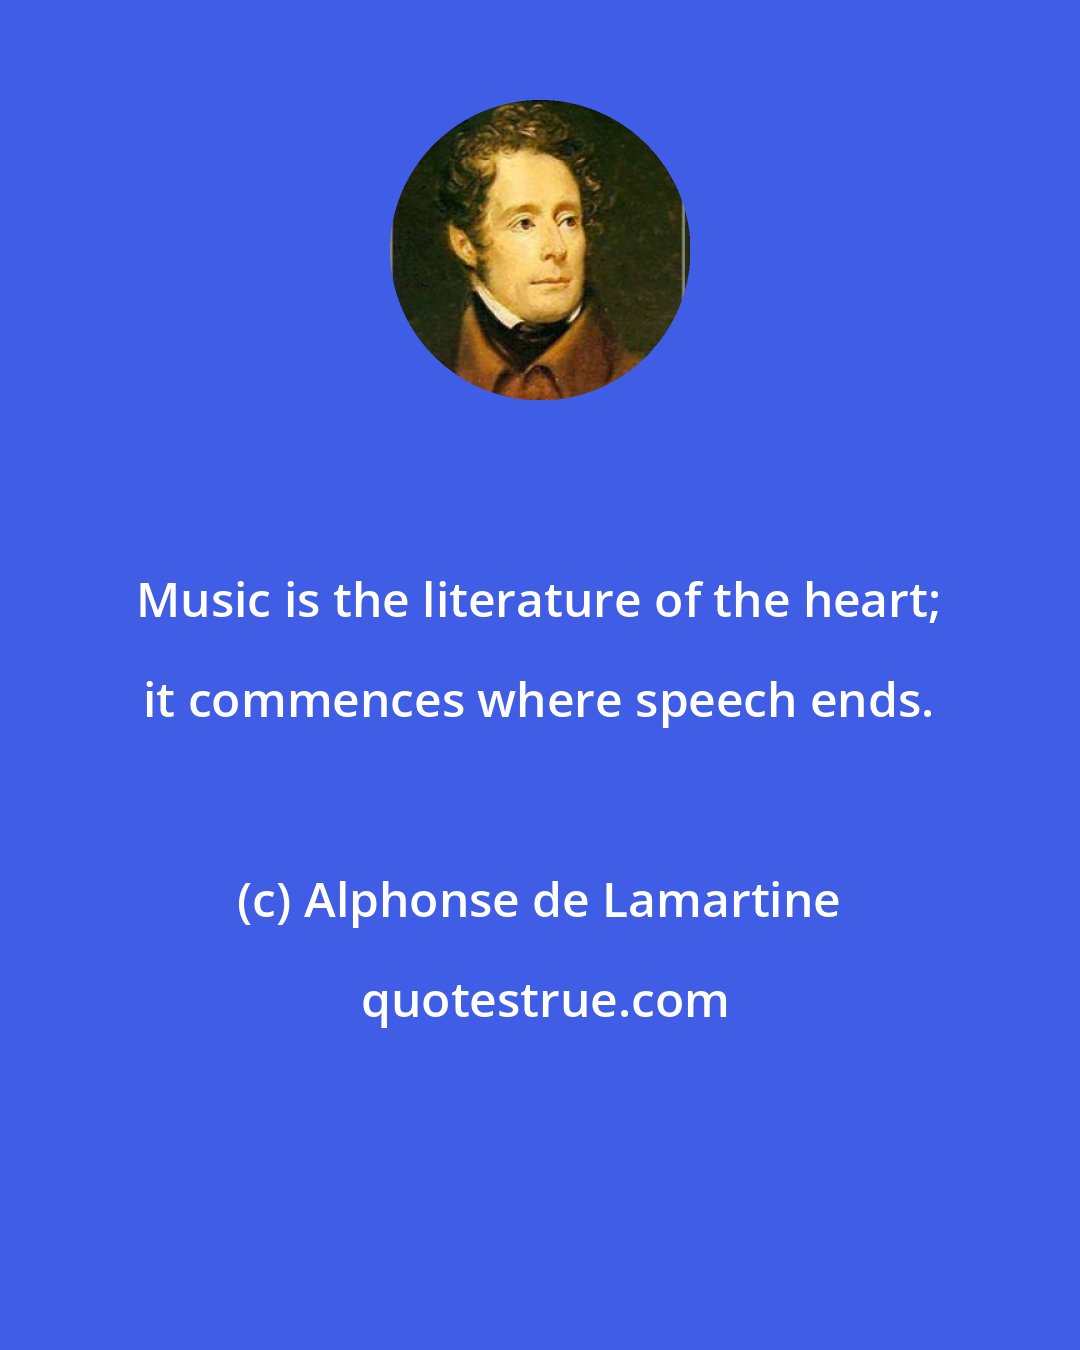 Alphonse de Lamartine: Music is the literature of the heart; it commences where speech ends.